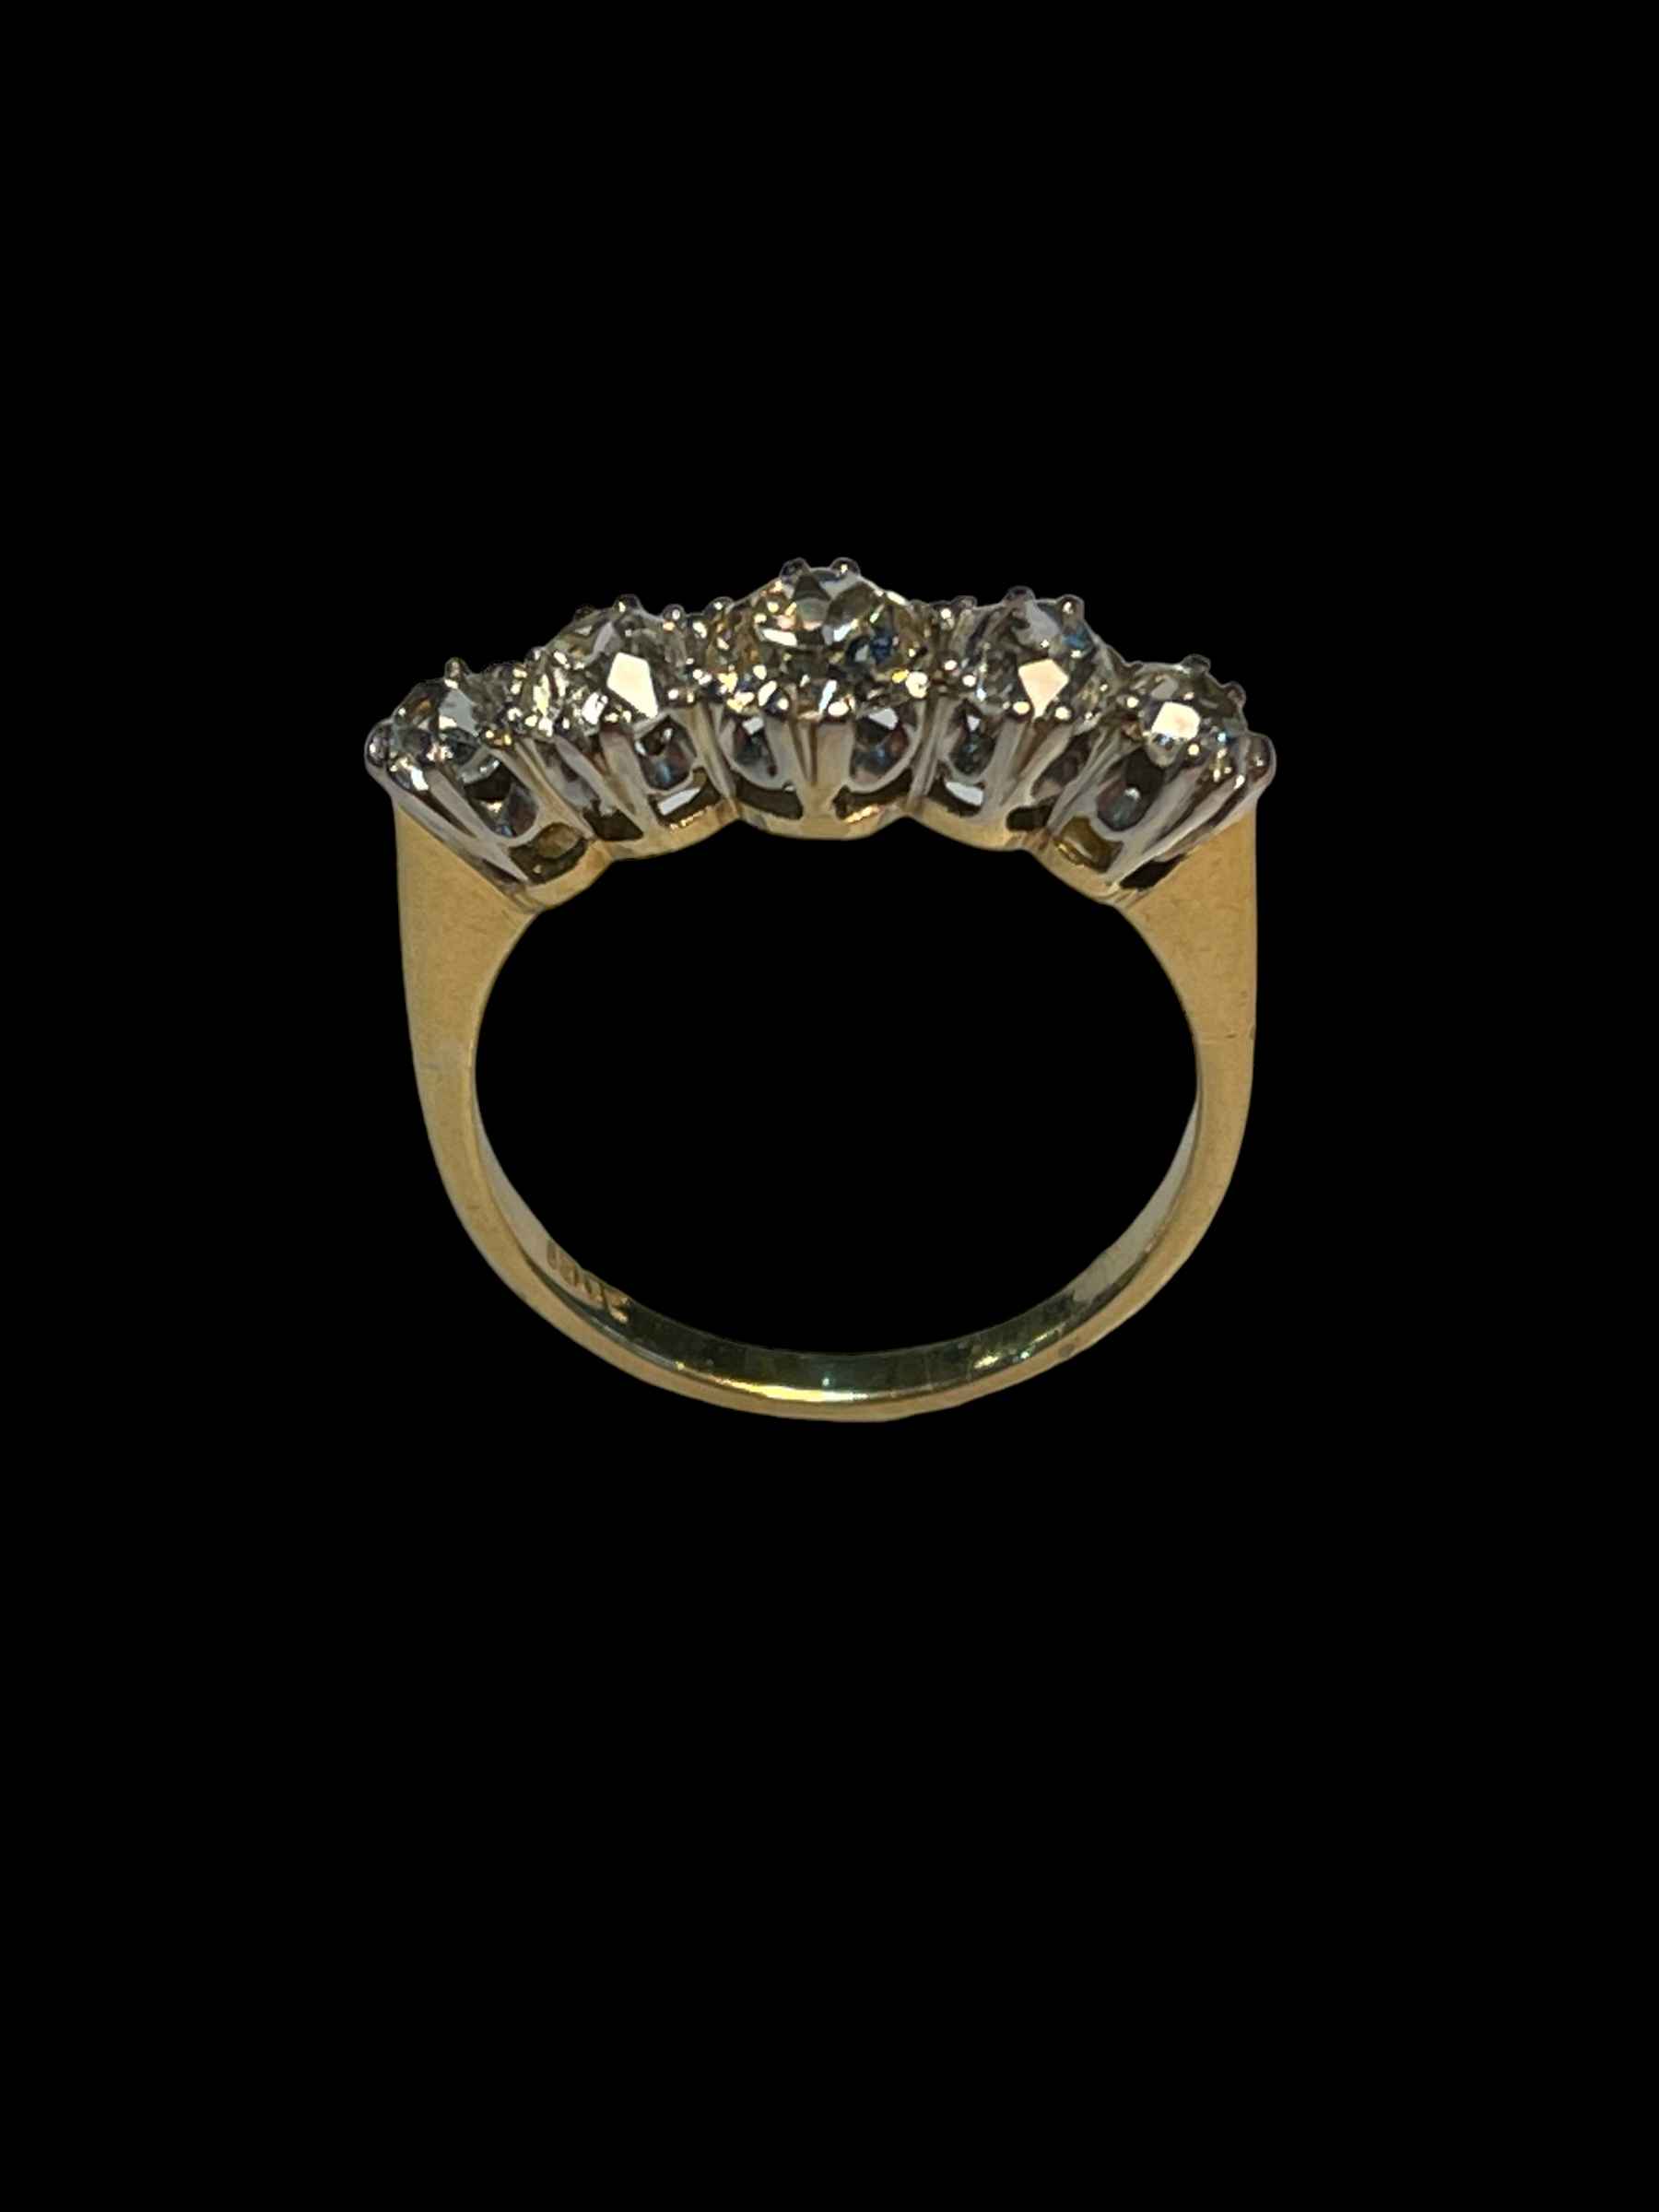 18 carat yellow gold five stone diamond ring with rose cut graduated diamonds set in platinum, - Image 2 of 2